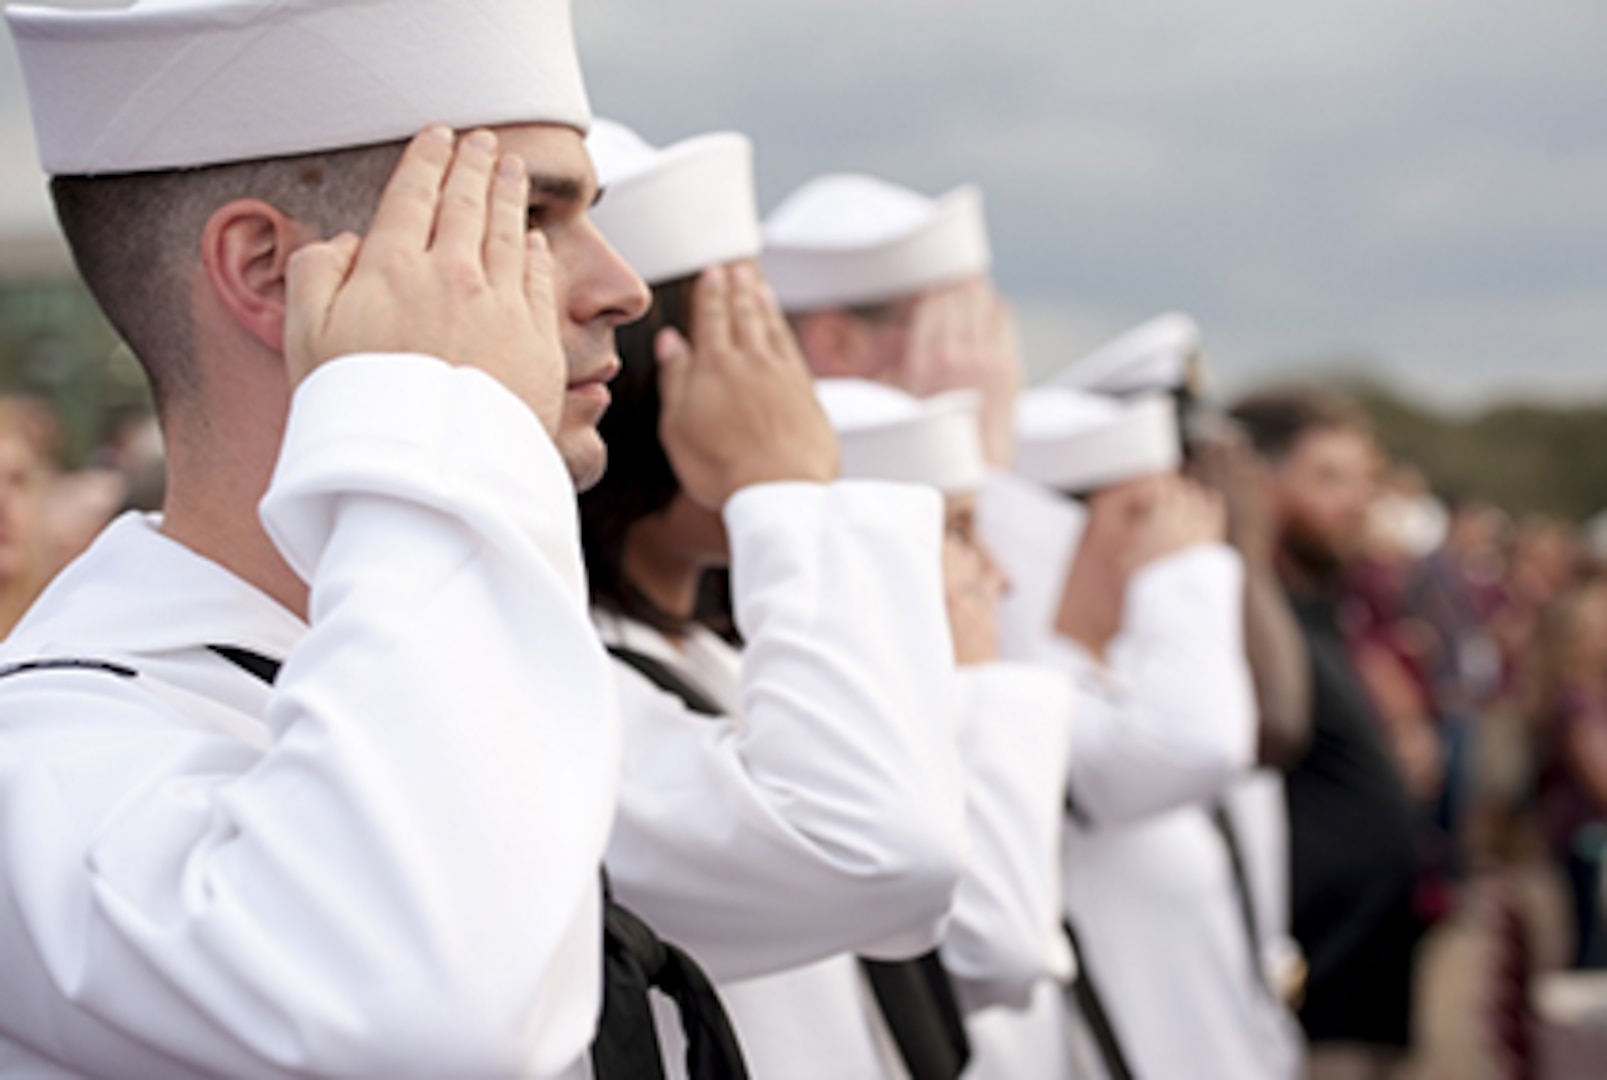 Sailors in white uniform in line saluting